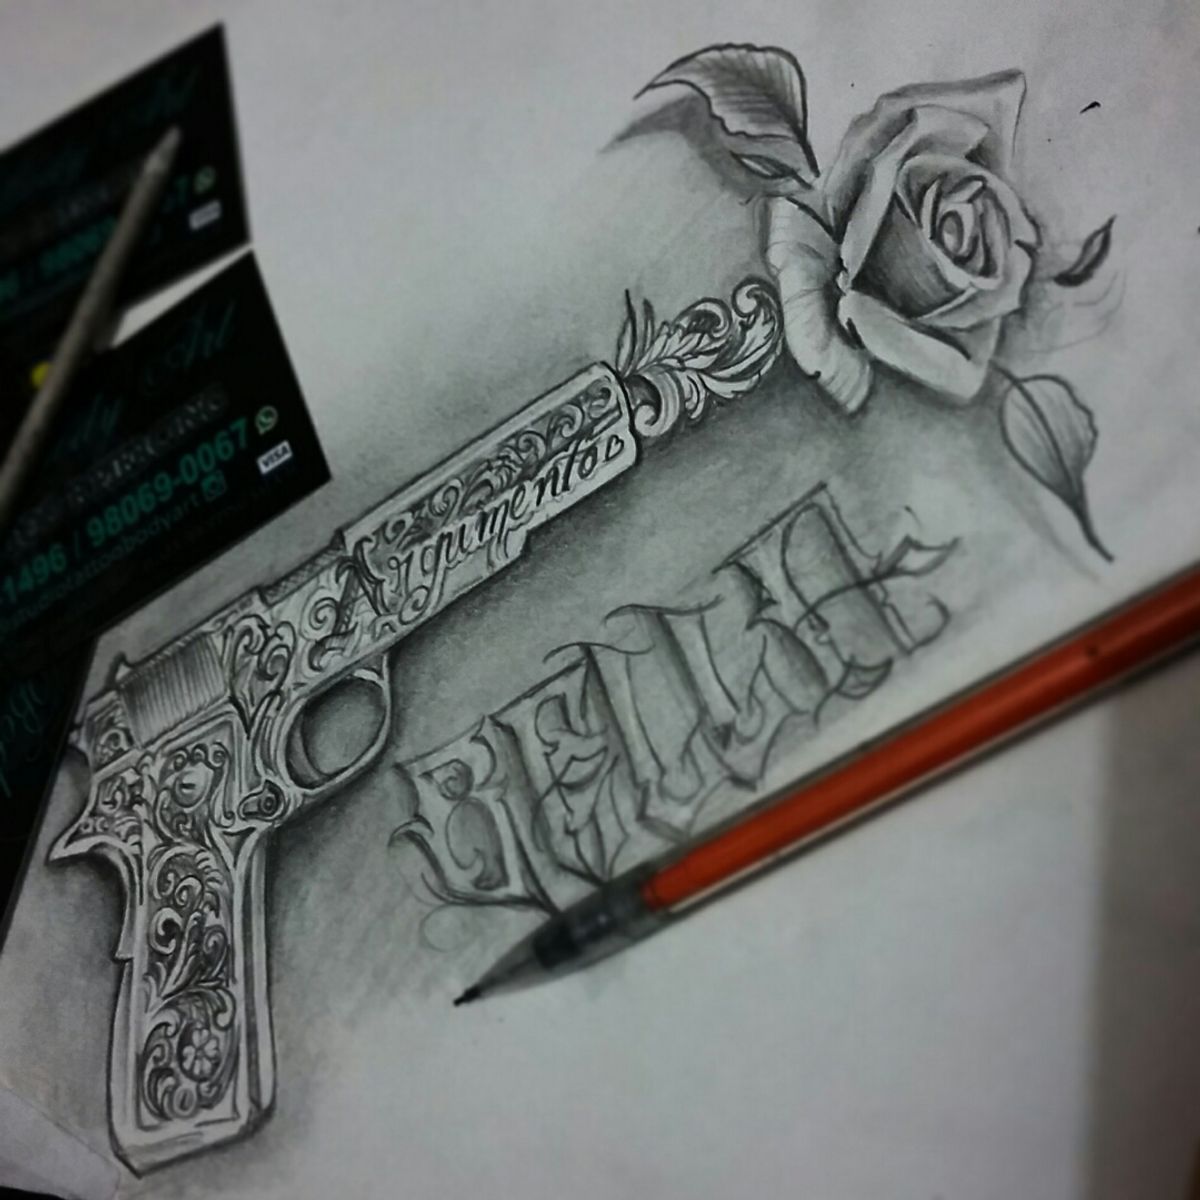 roses and guns drawings